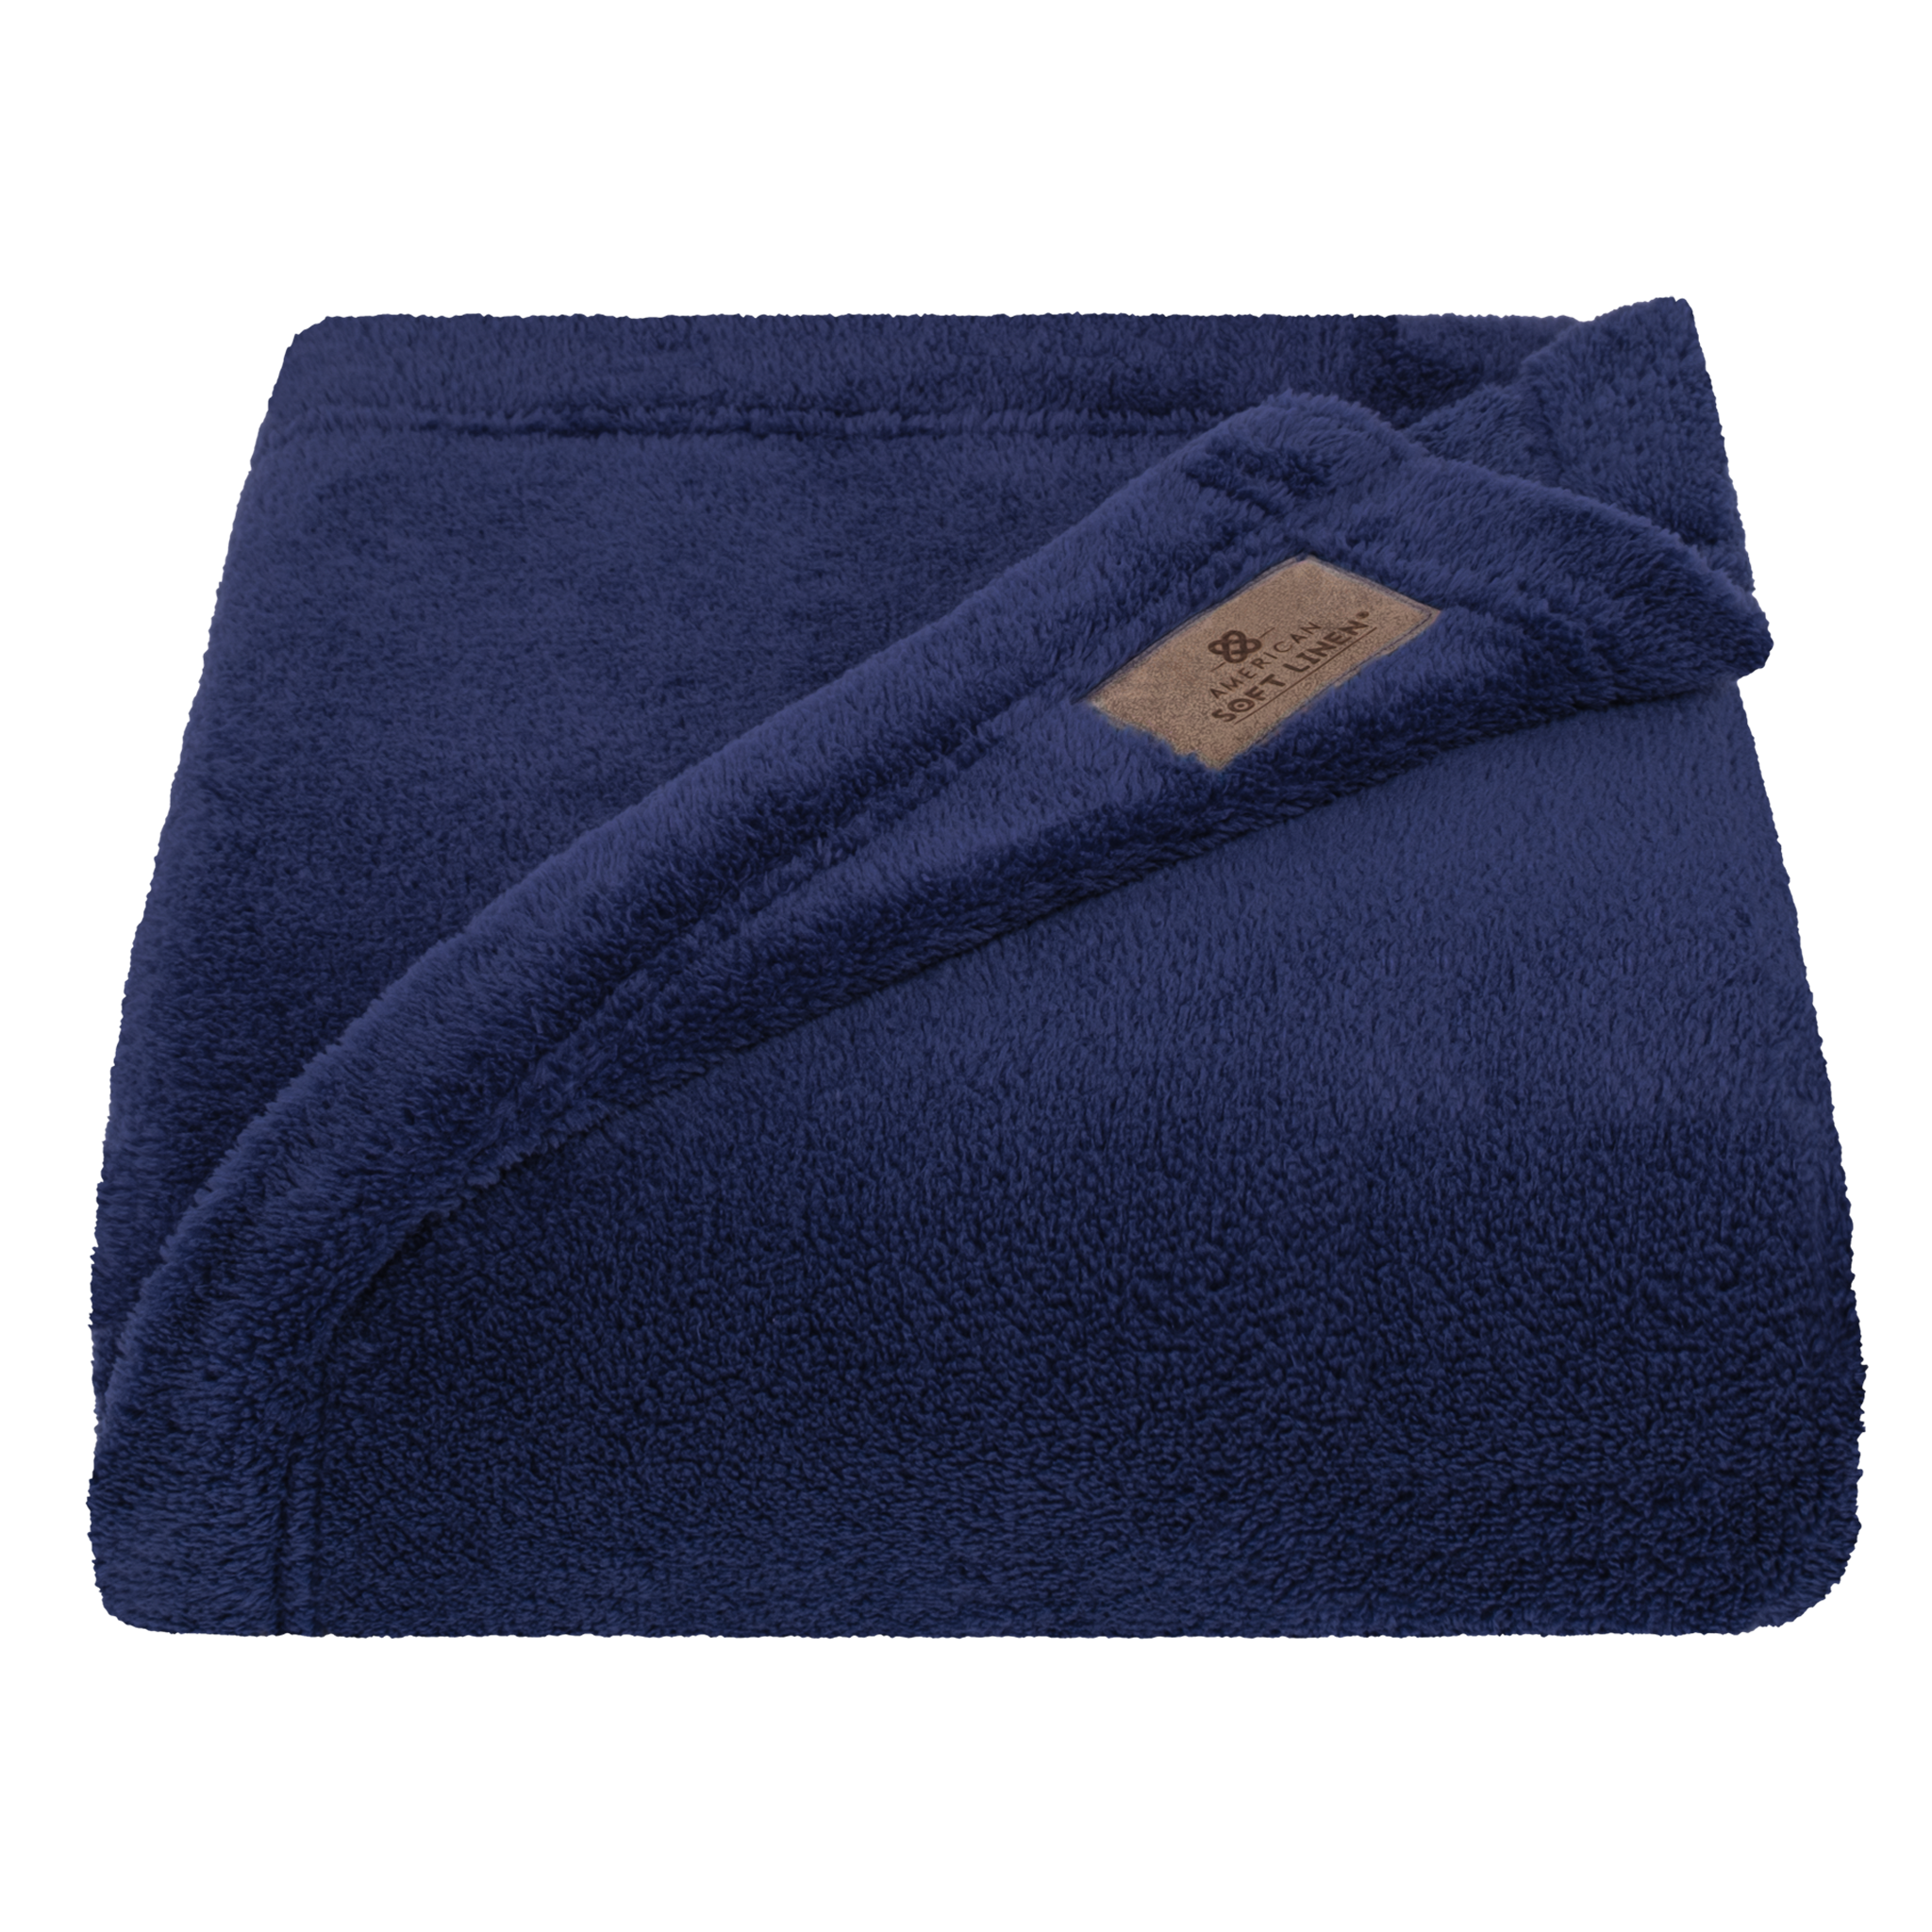 American Soft Linen - Bedding Fleece Blanket - Throw Size 50x60 inches - Navy-Blue - 3